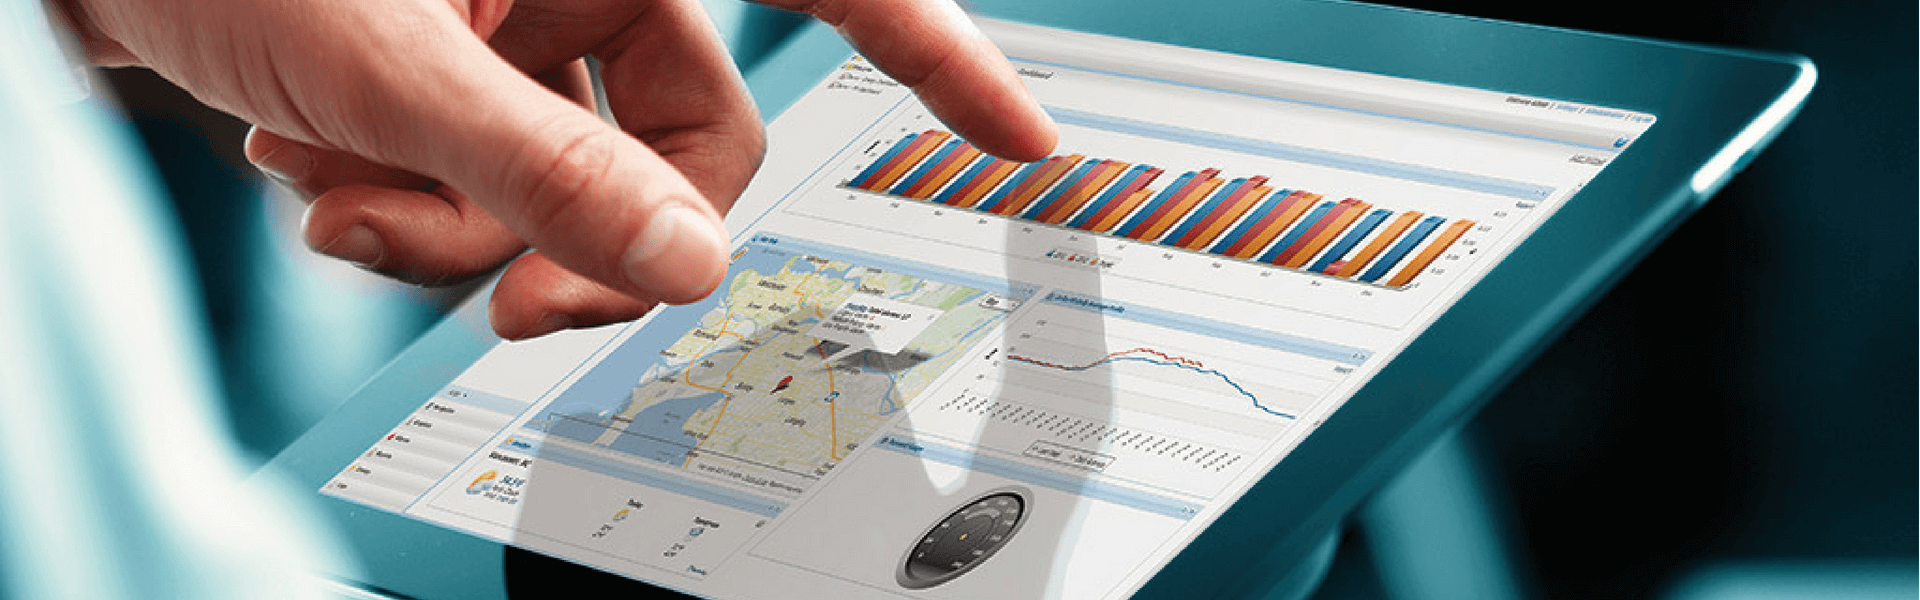 Enterprise resource planning systems